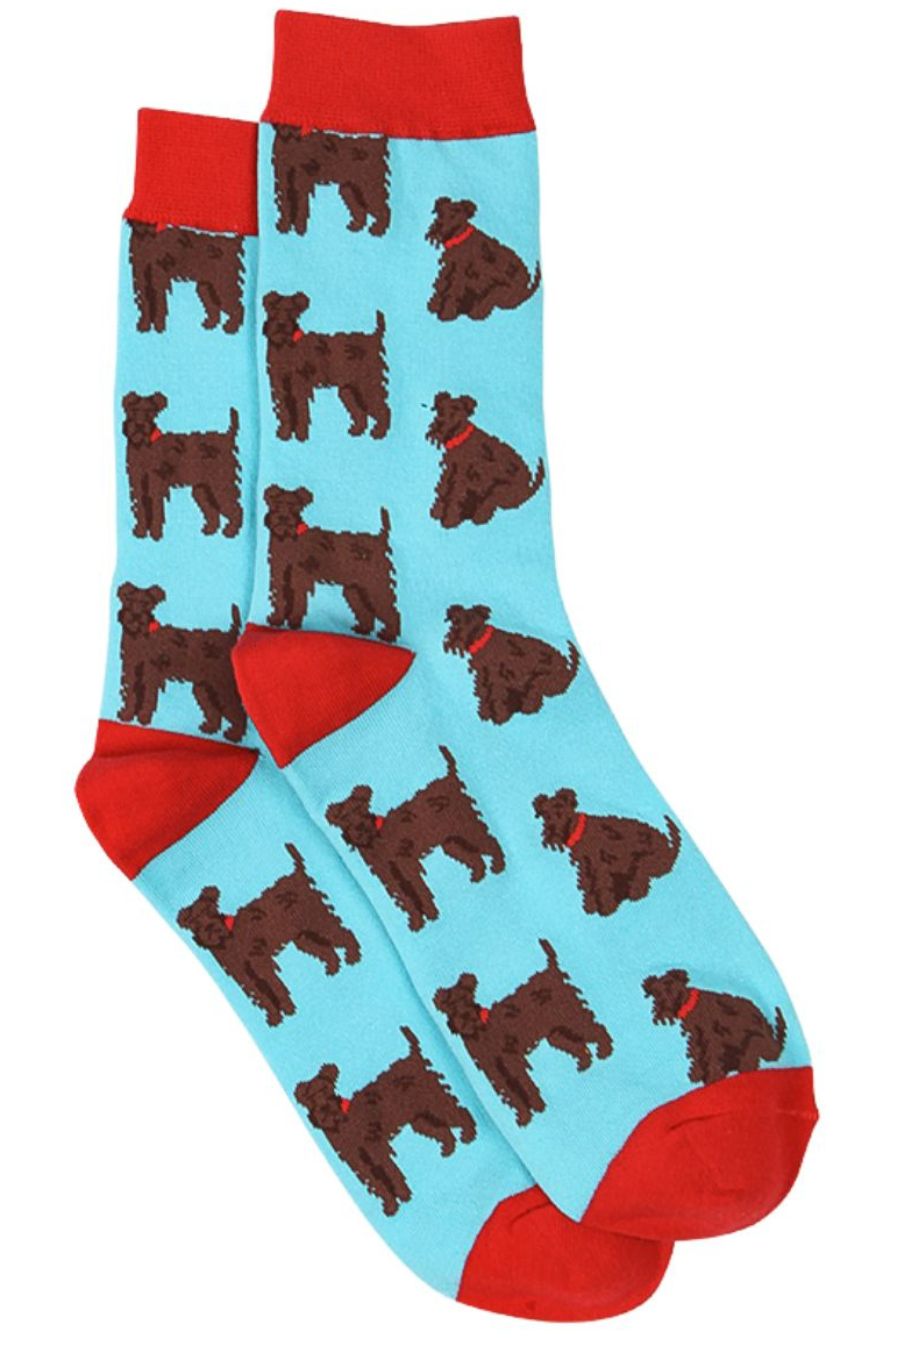 blue, red dress socks with schnauzer dogs on them